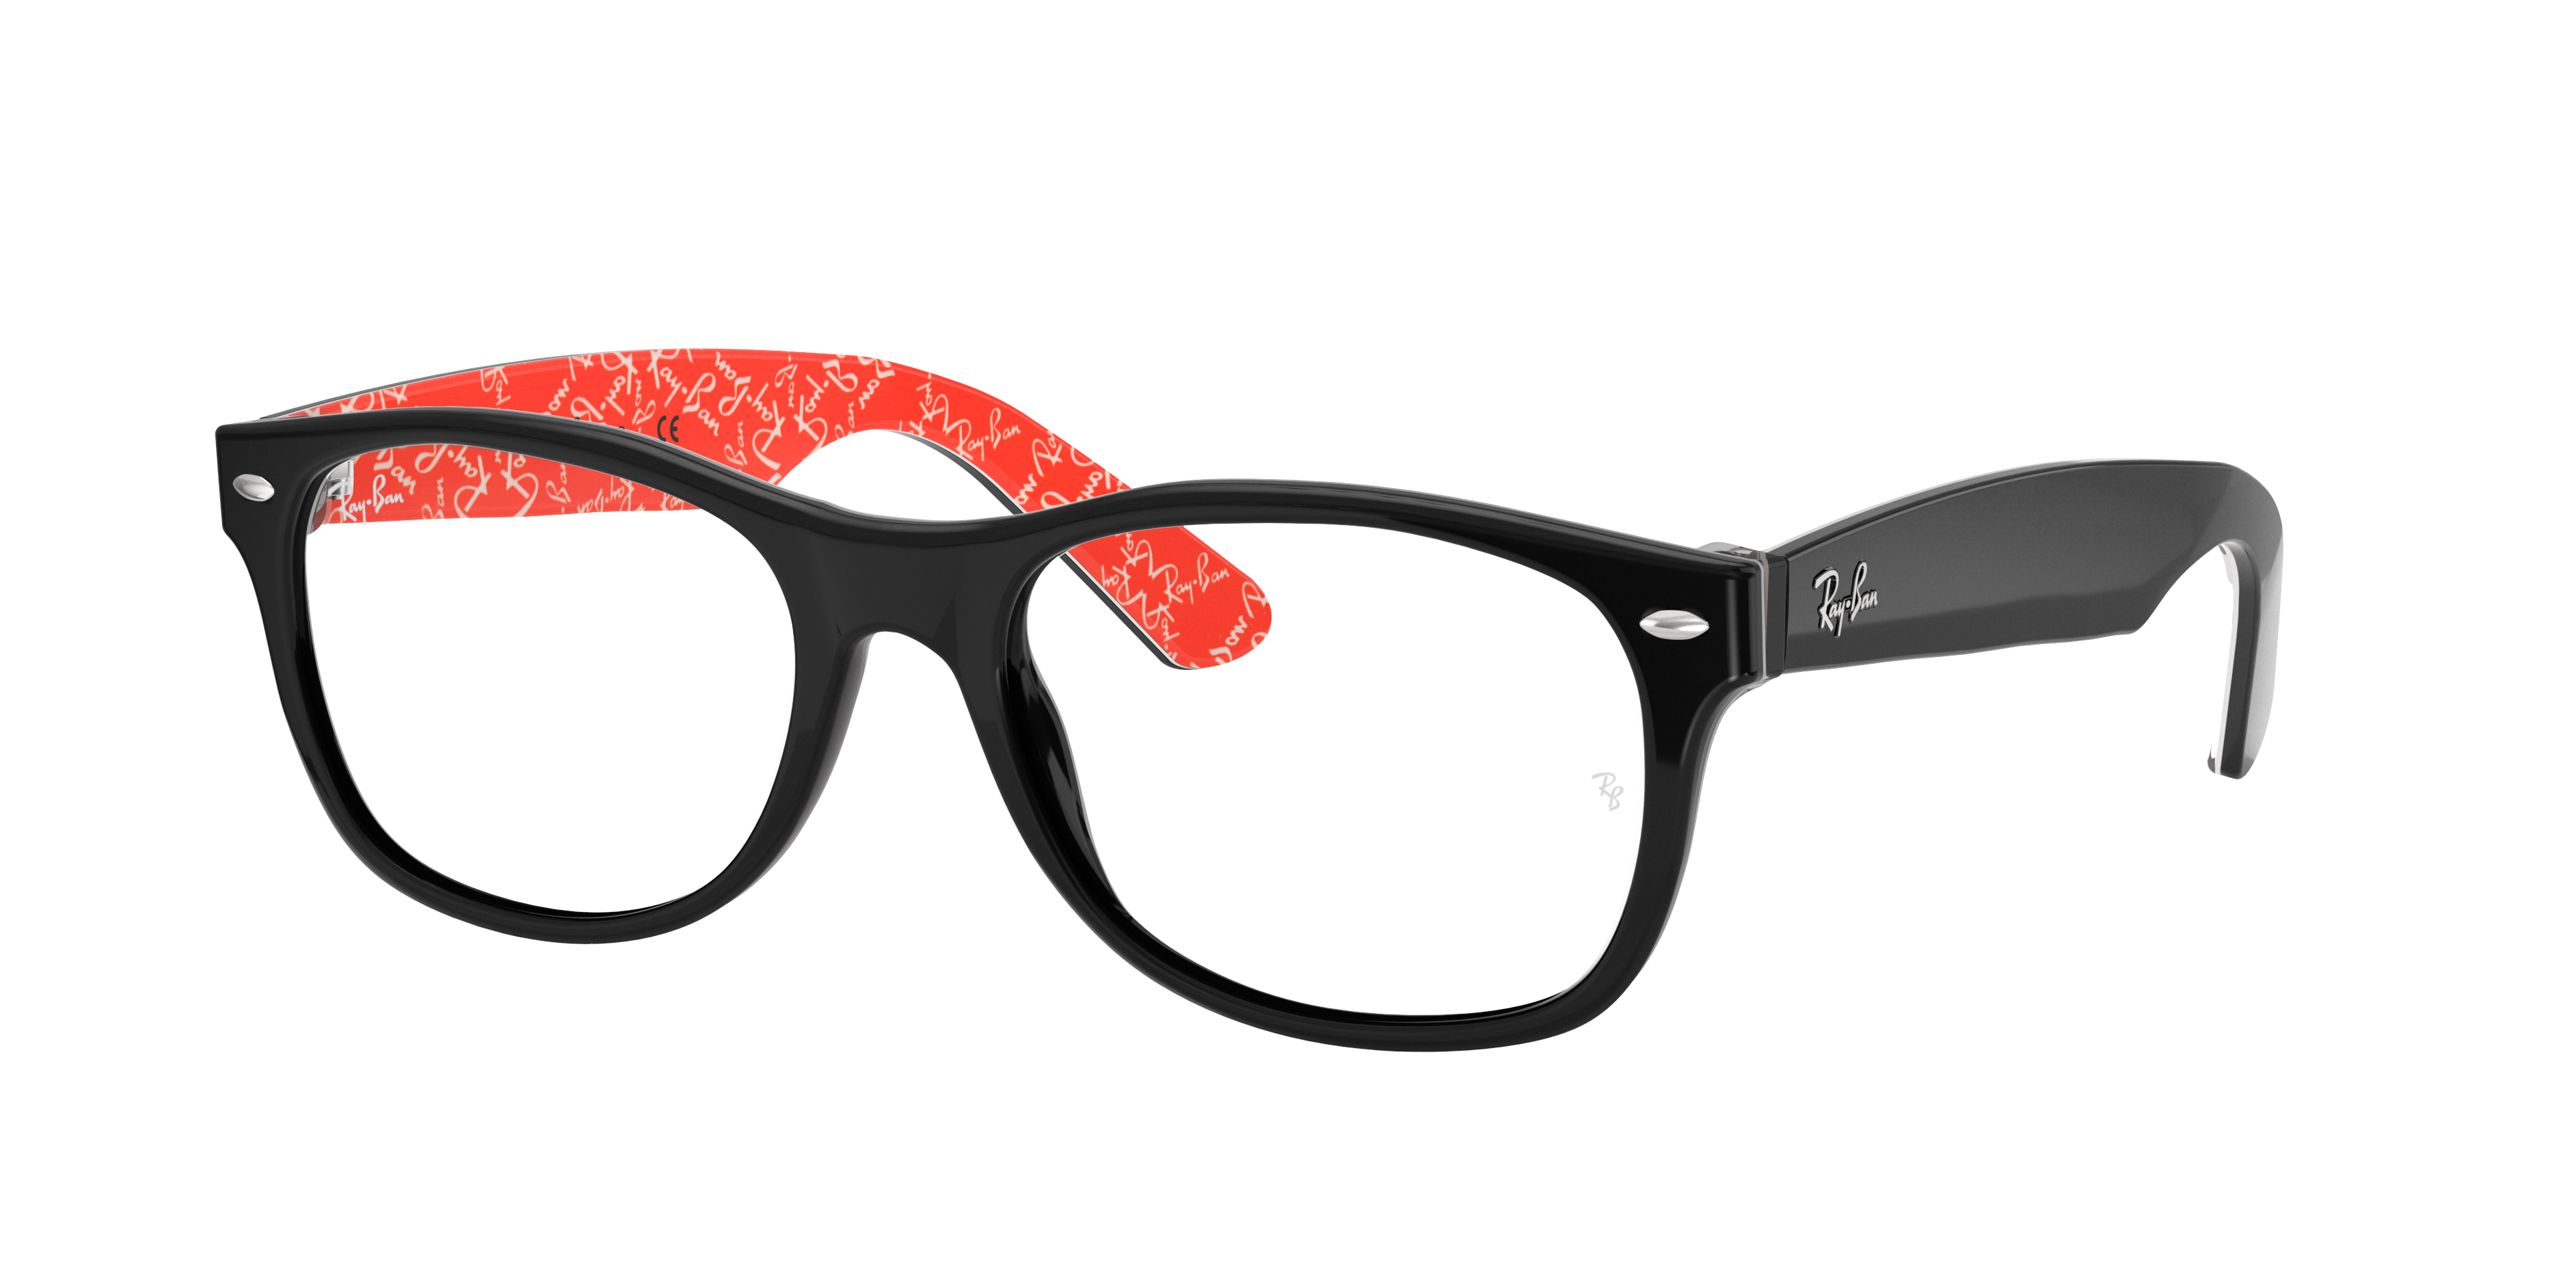 New Wayfarer Optics Eyeglasses with Black On Red Frame | Ray-Ban®